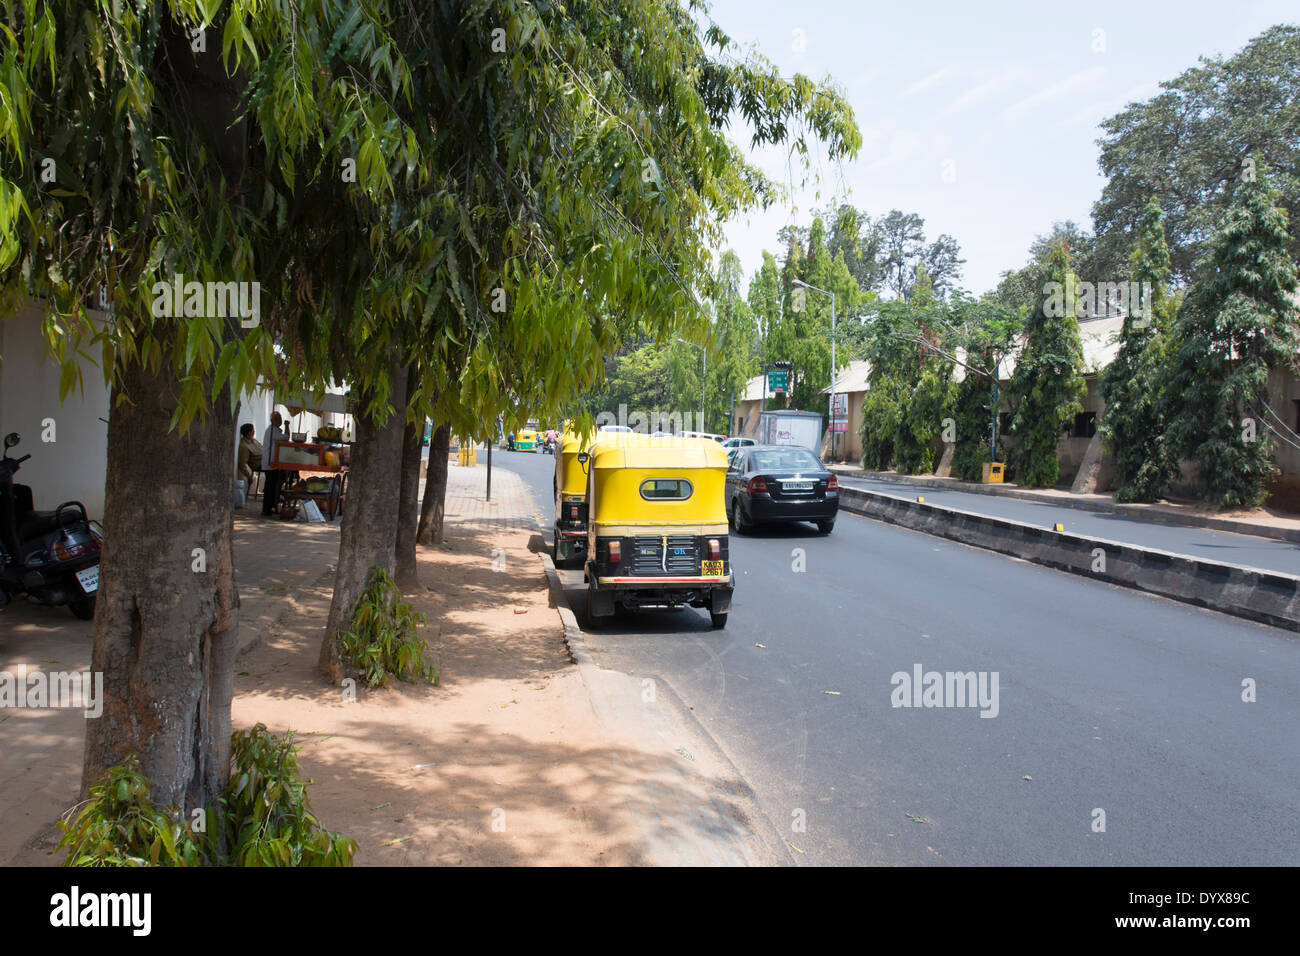 A street scene showing Auto Rickshaws with their drivers resting in Bangalore, Karnatake, India Stock Photo